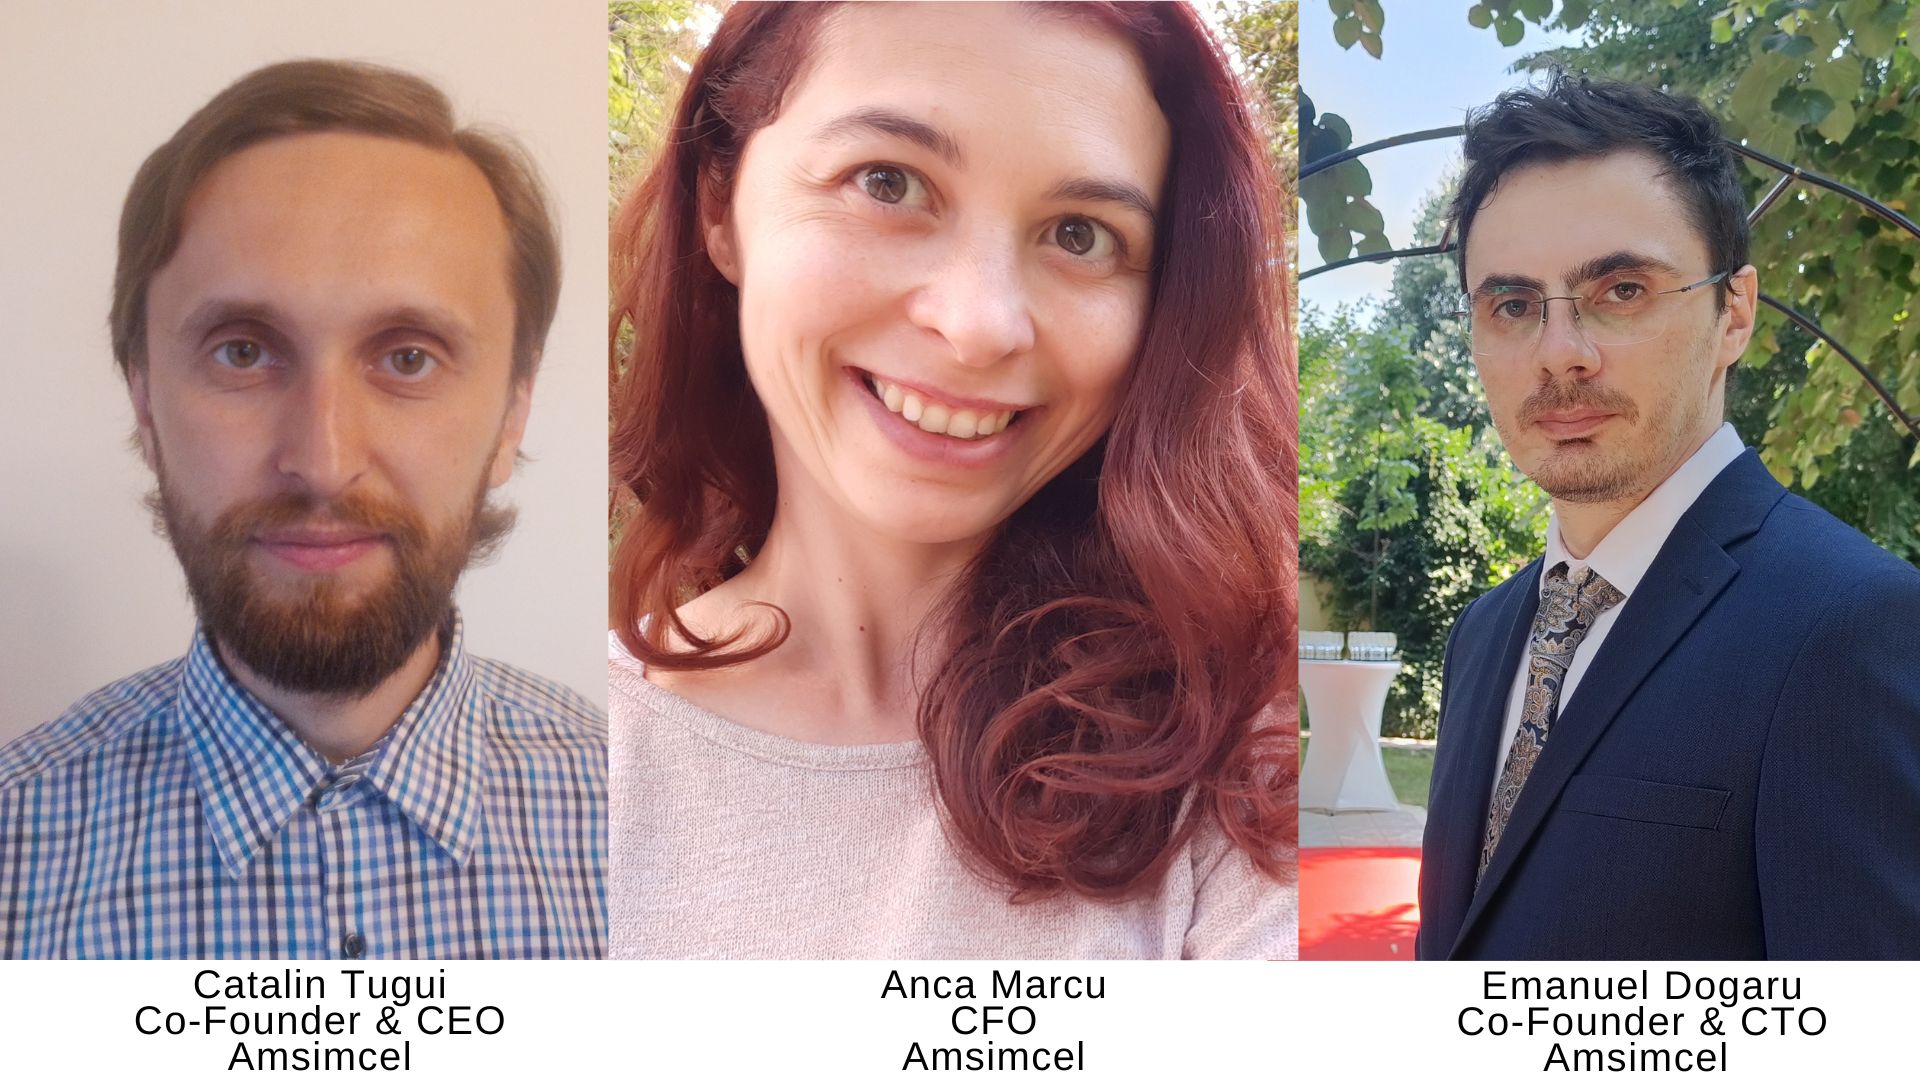 Catalin-Tugui-Co-Founder-CEO-Anca-Marcu-CFO-Emanuel-Dogaru-Co-Founder-CTO-2